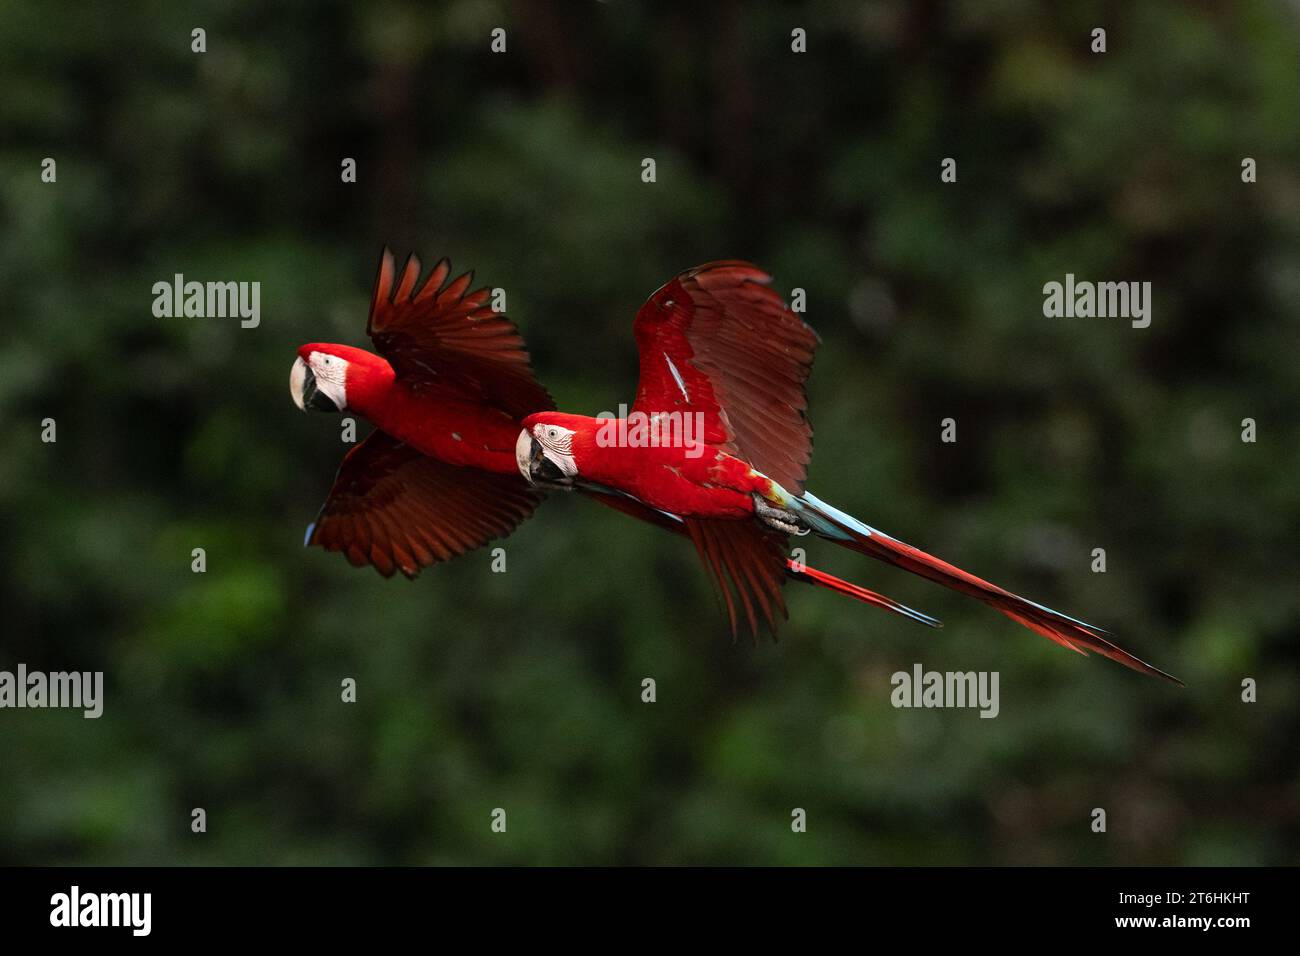 Macaws rosse e verdi dal Brasile Foto Stock